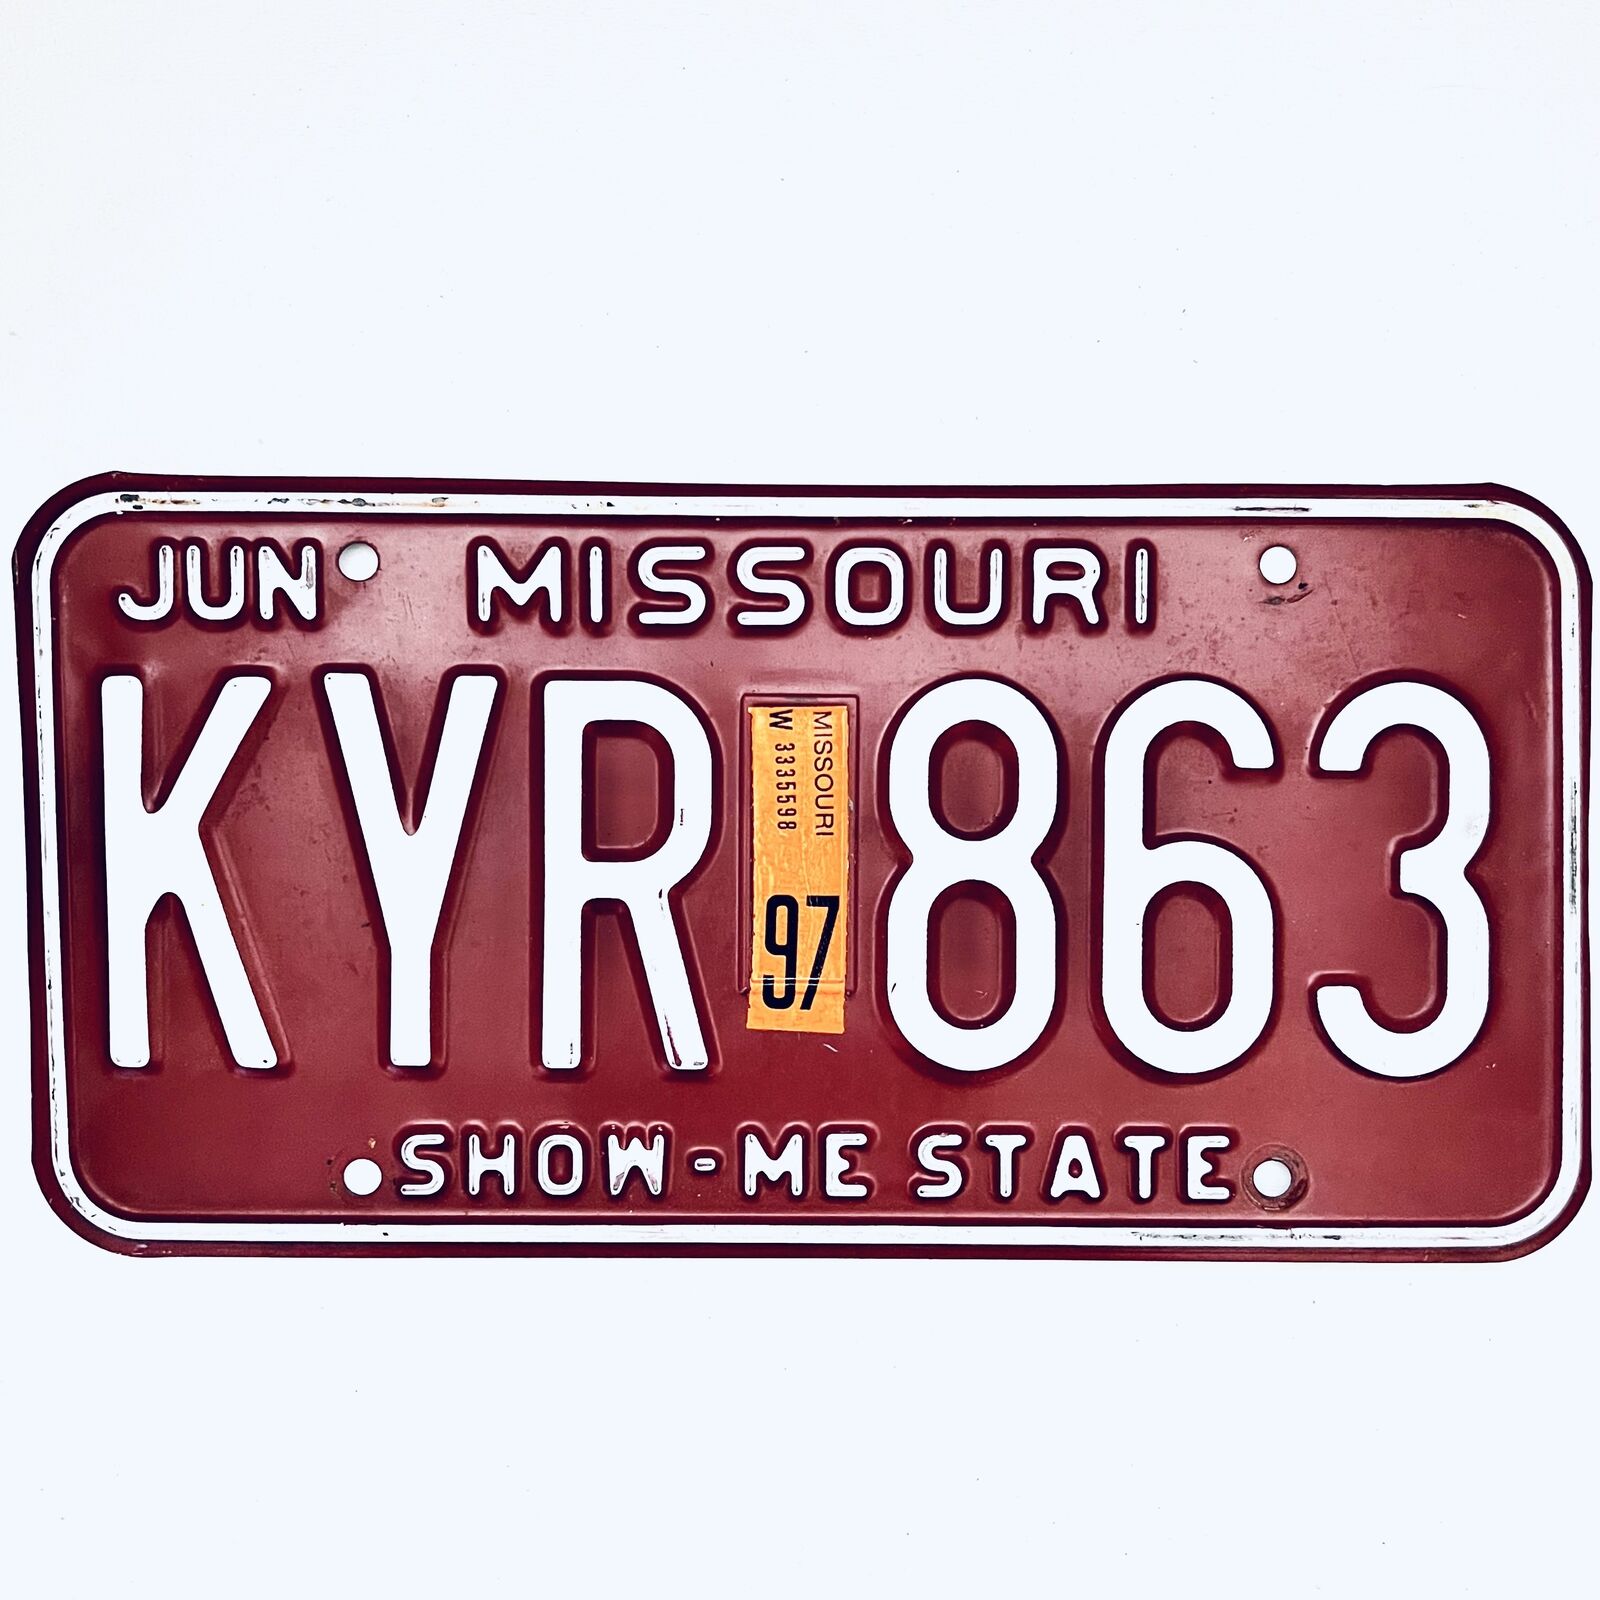 1997 United States Missouri Show-Me State Passenger License Plate KYR 863